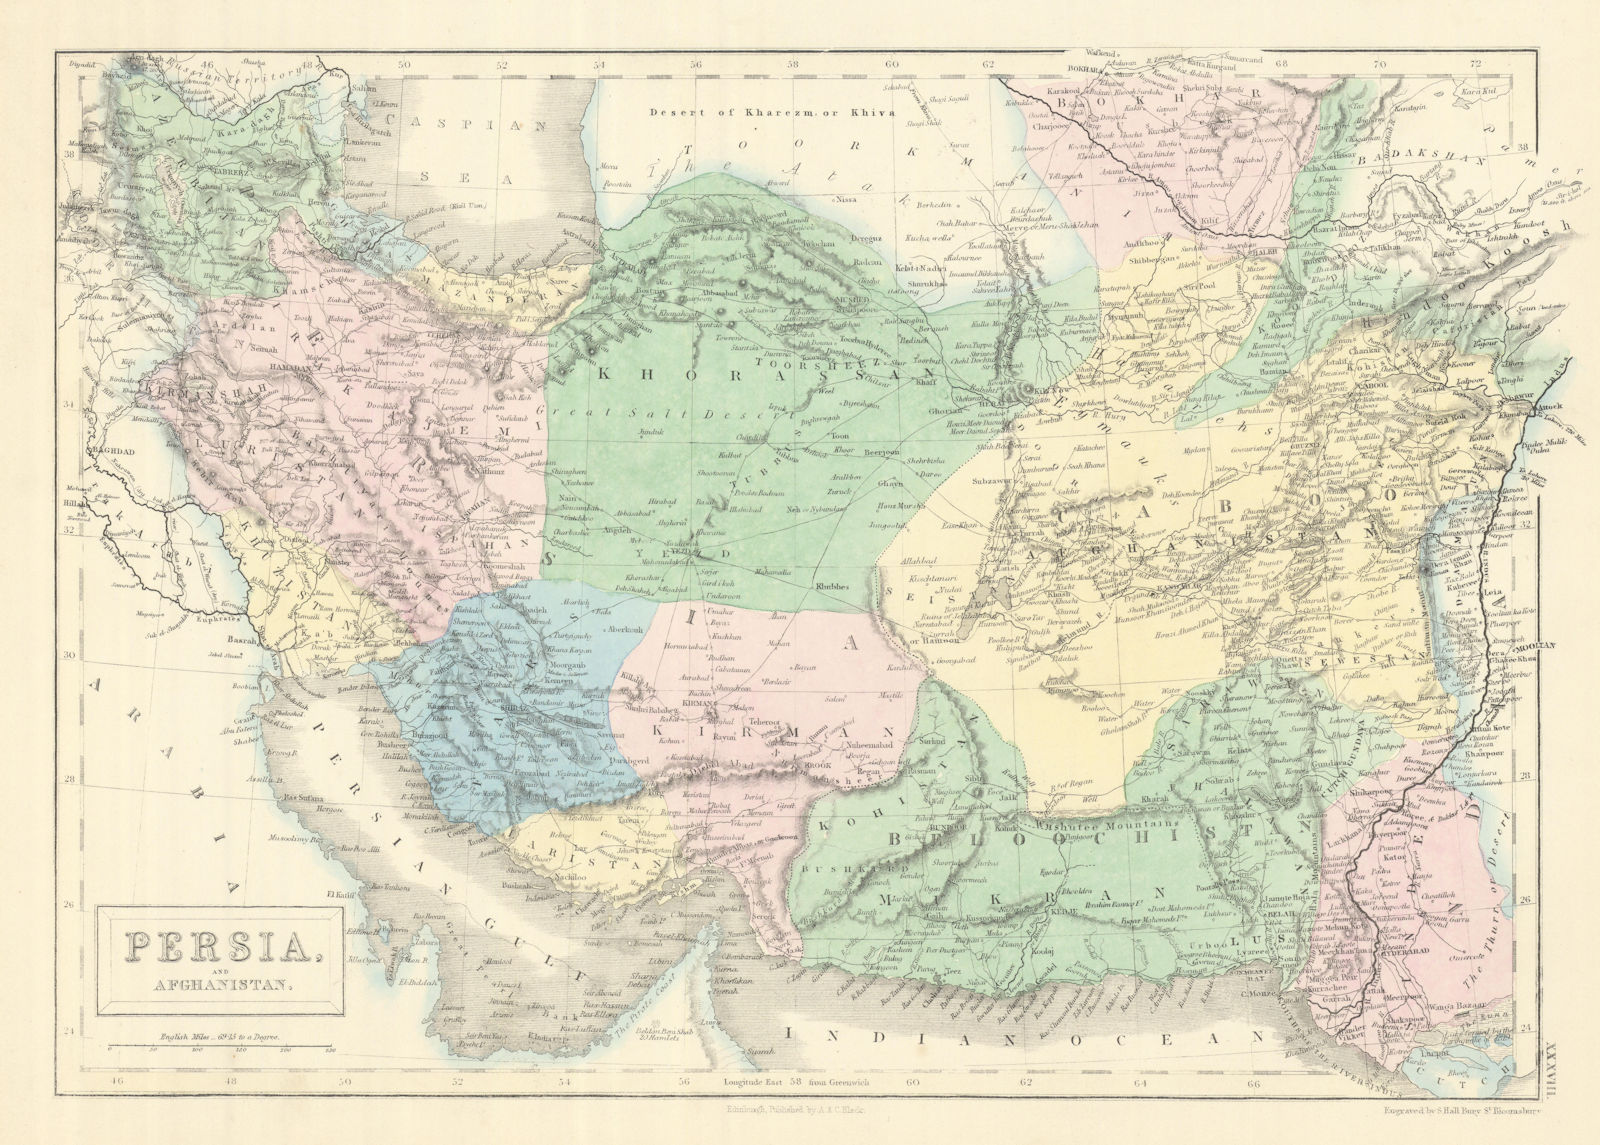 Persia & Afghanistan. Iran SW Asia Pirate Coast 'Debai' (Dubai) HALL 1854 map